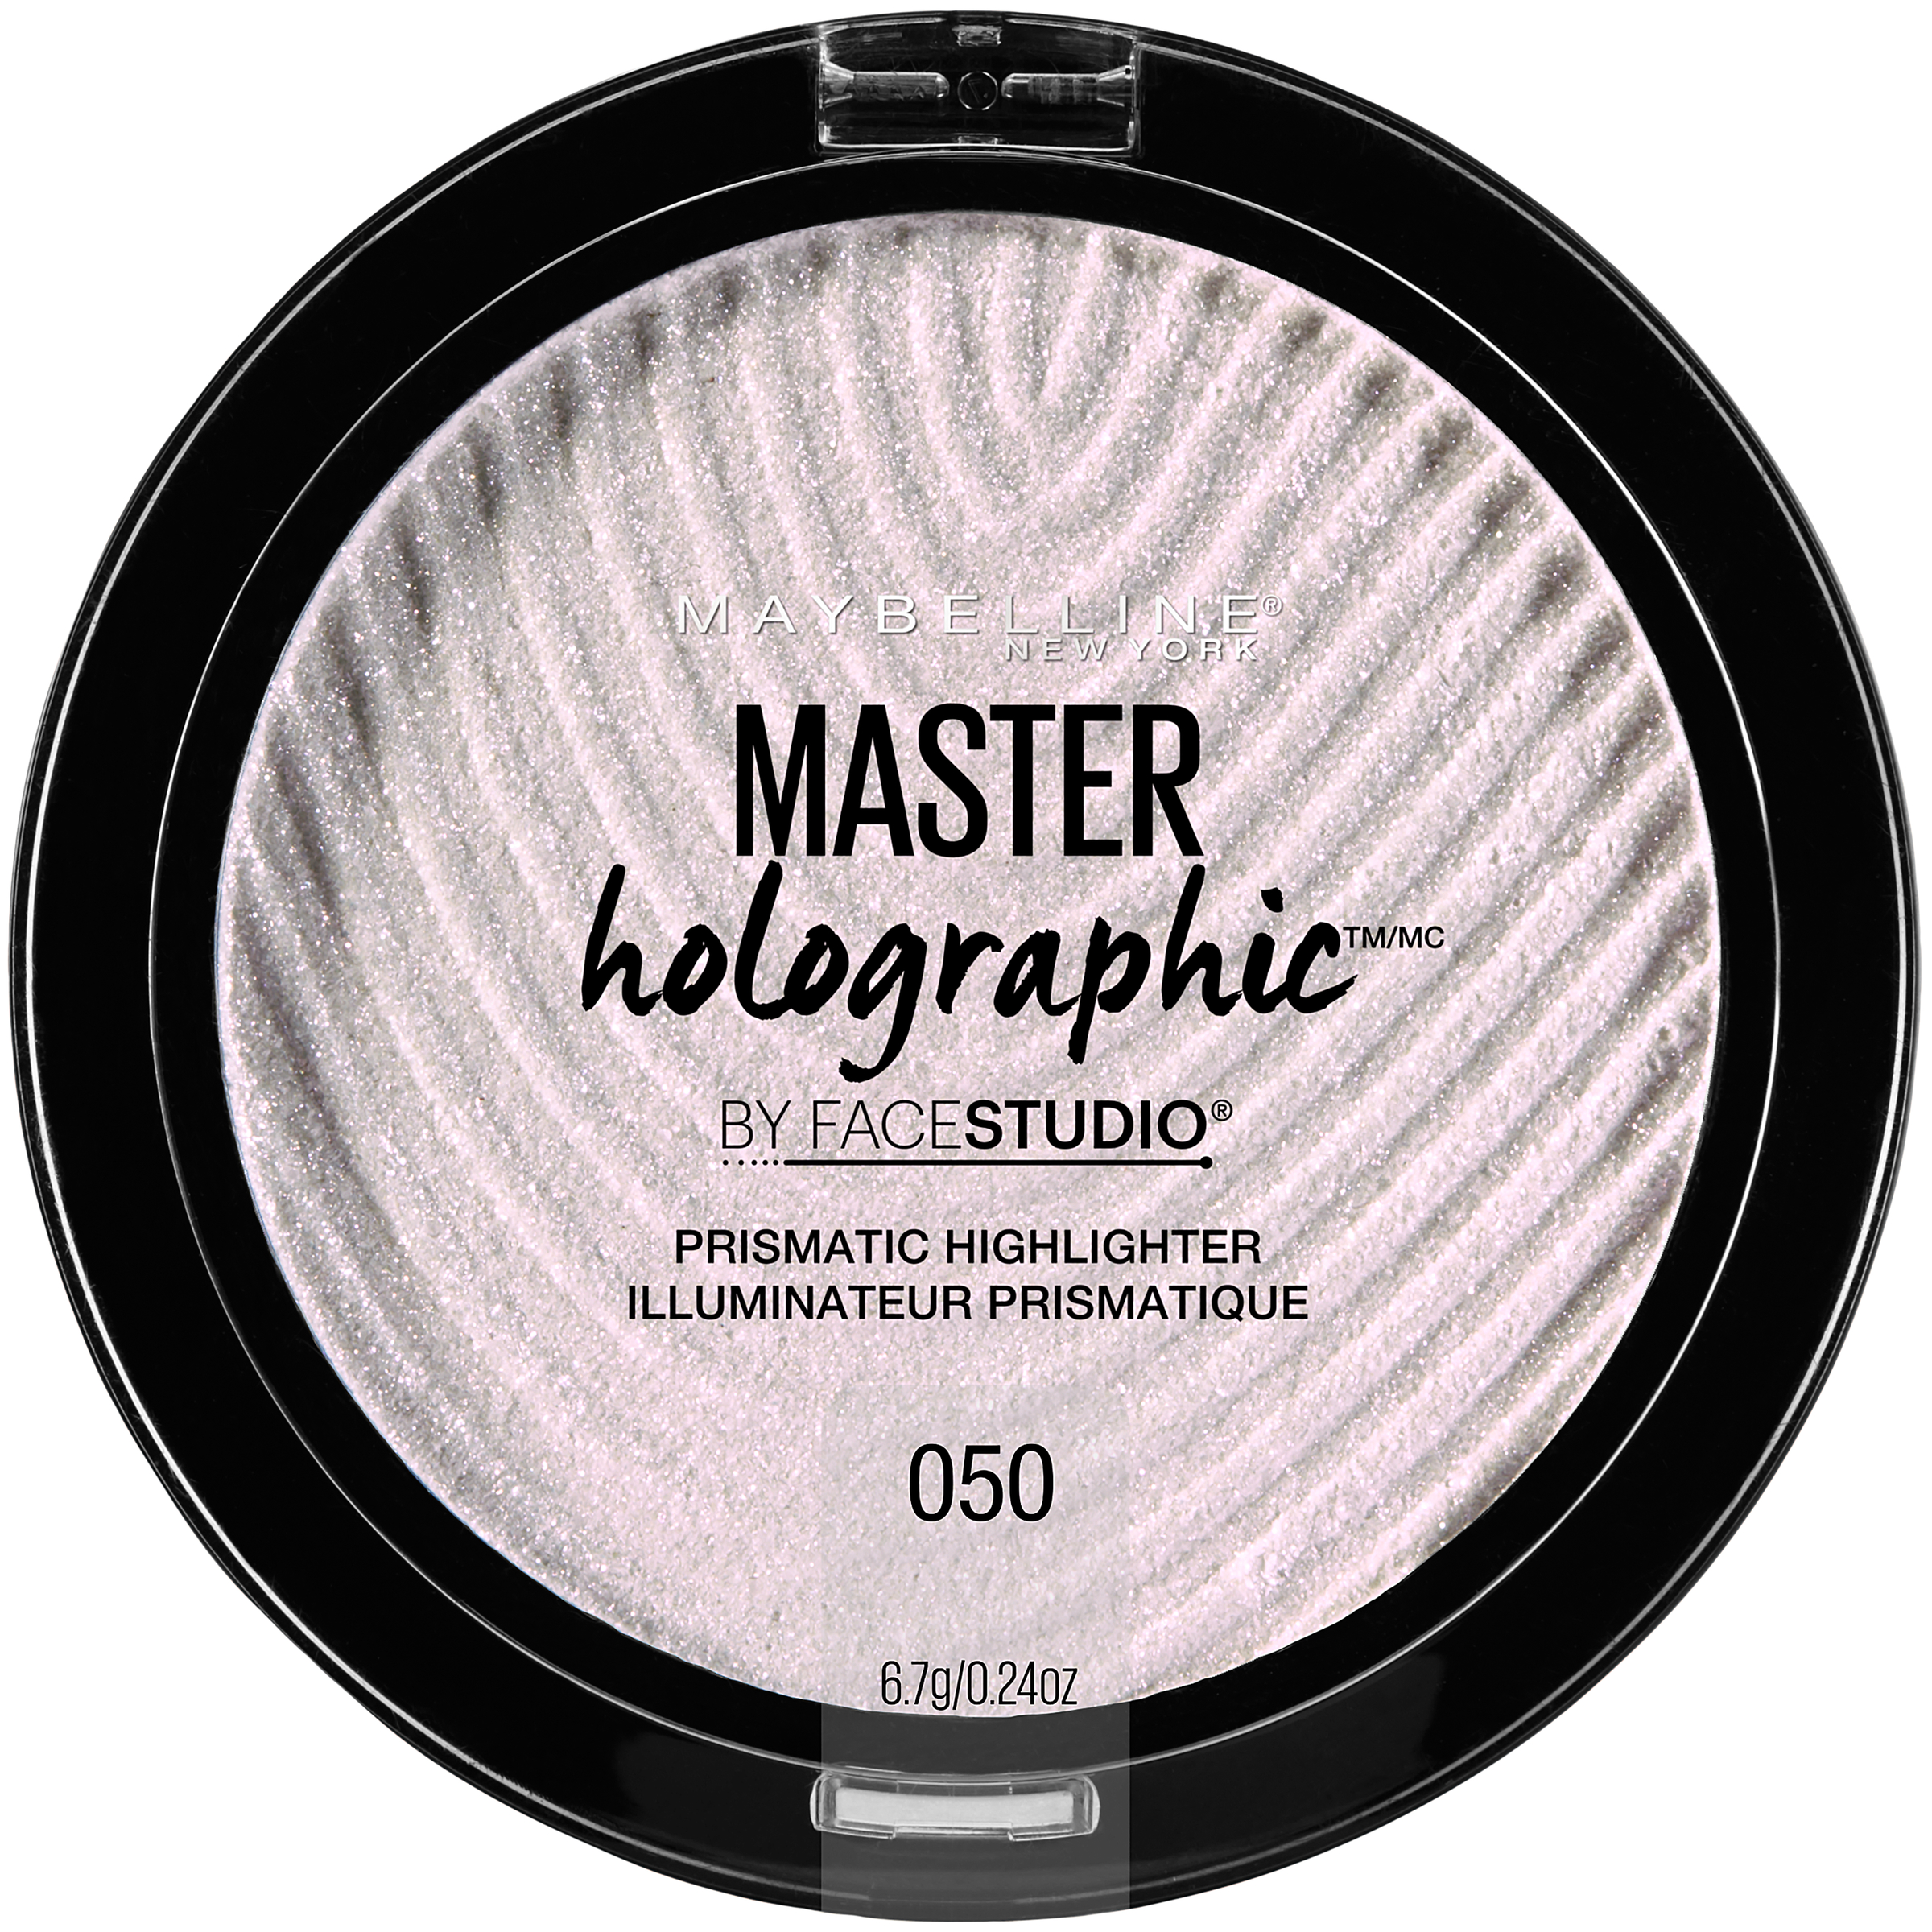 Maybelline New York Maybelline Facestudio Master Holographic Prismatic Highlighter Makeup, Opal, 0.24 oz.